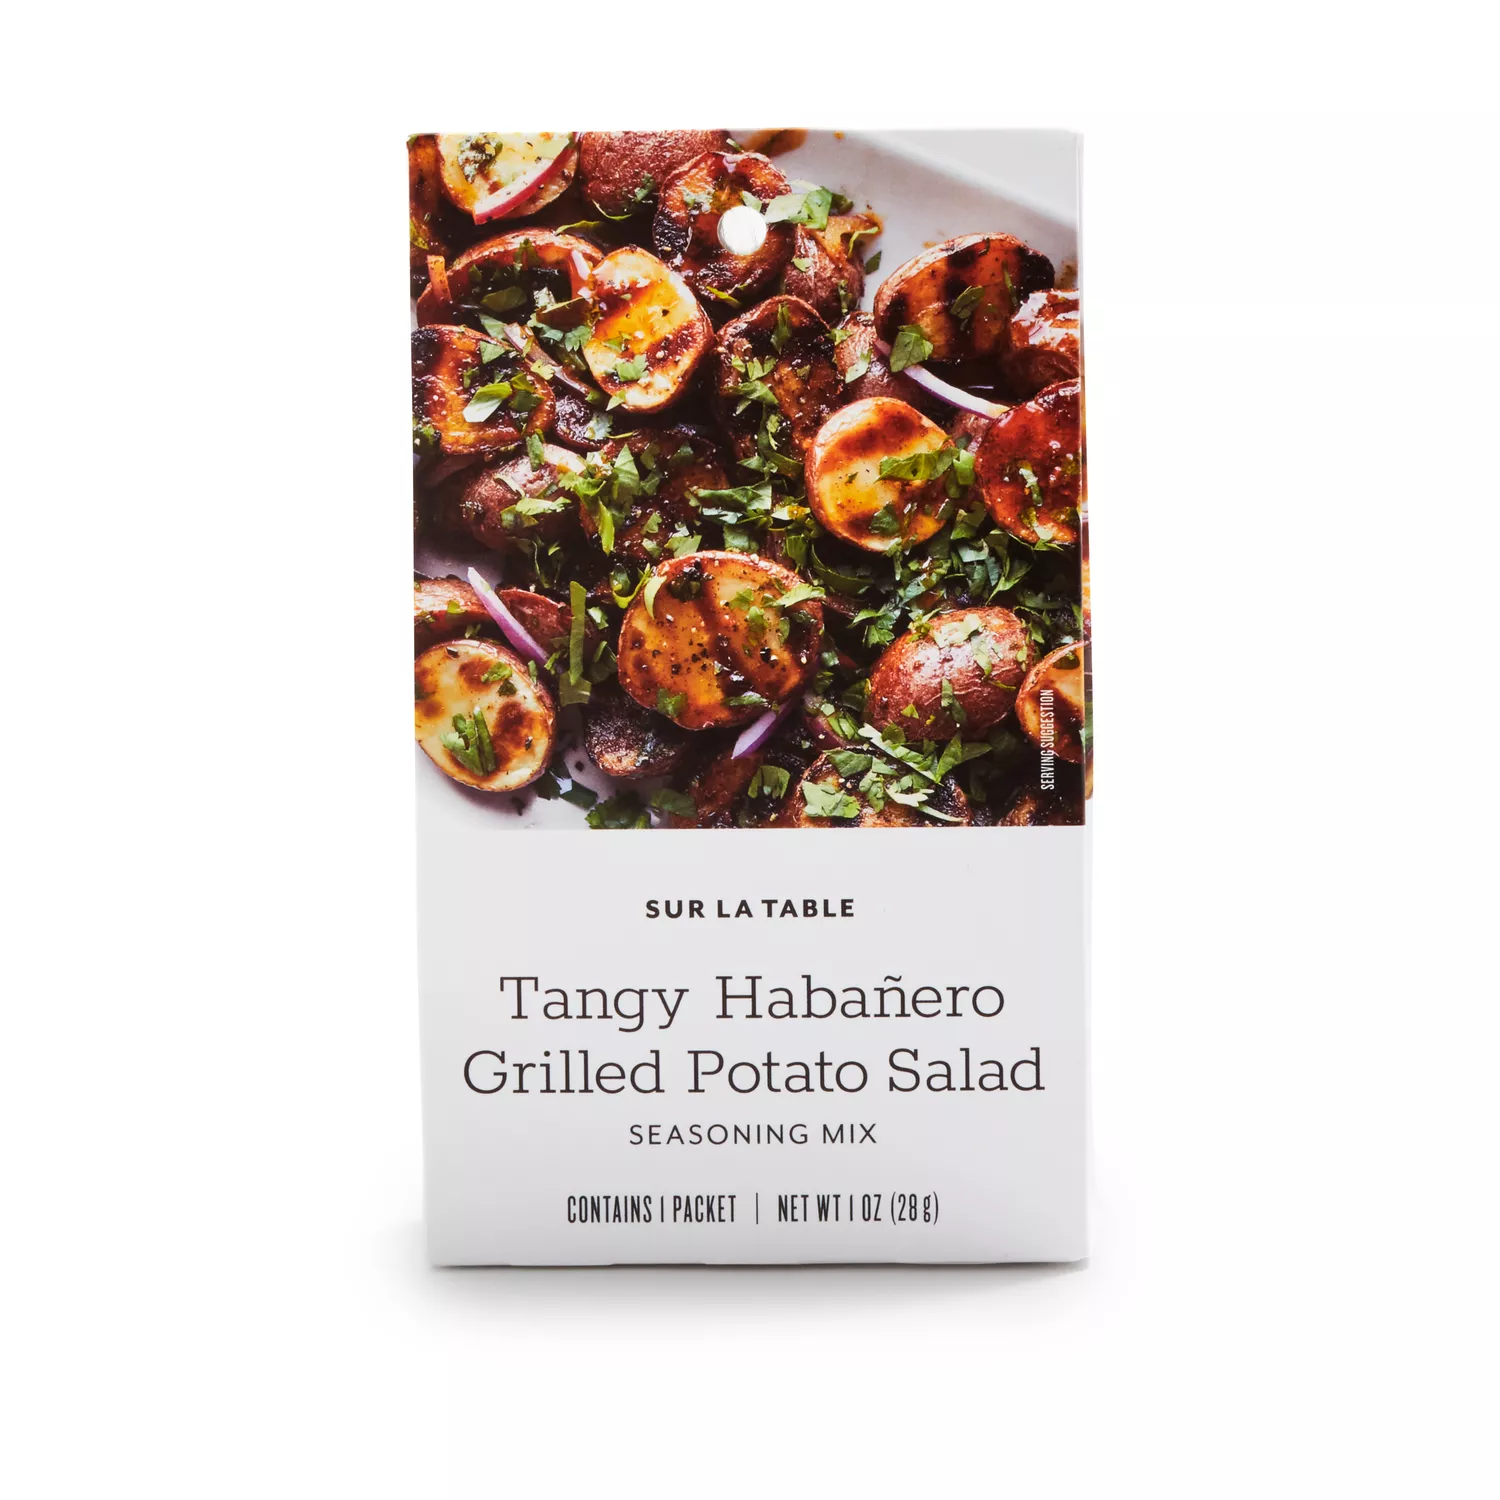 Sur La Table Tangy Habanero Grilled Potato Salad Seasoning Mix